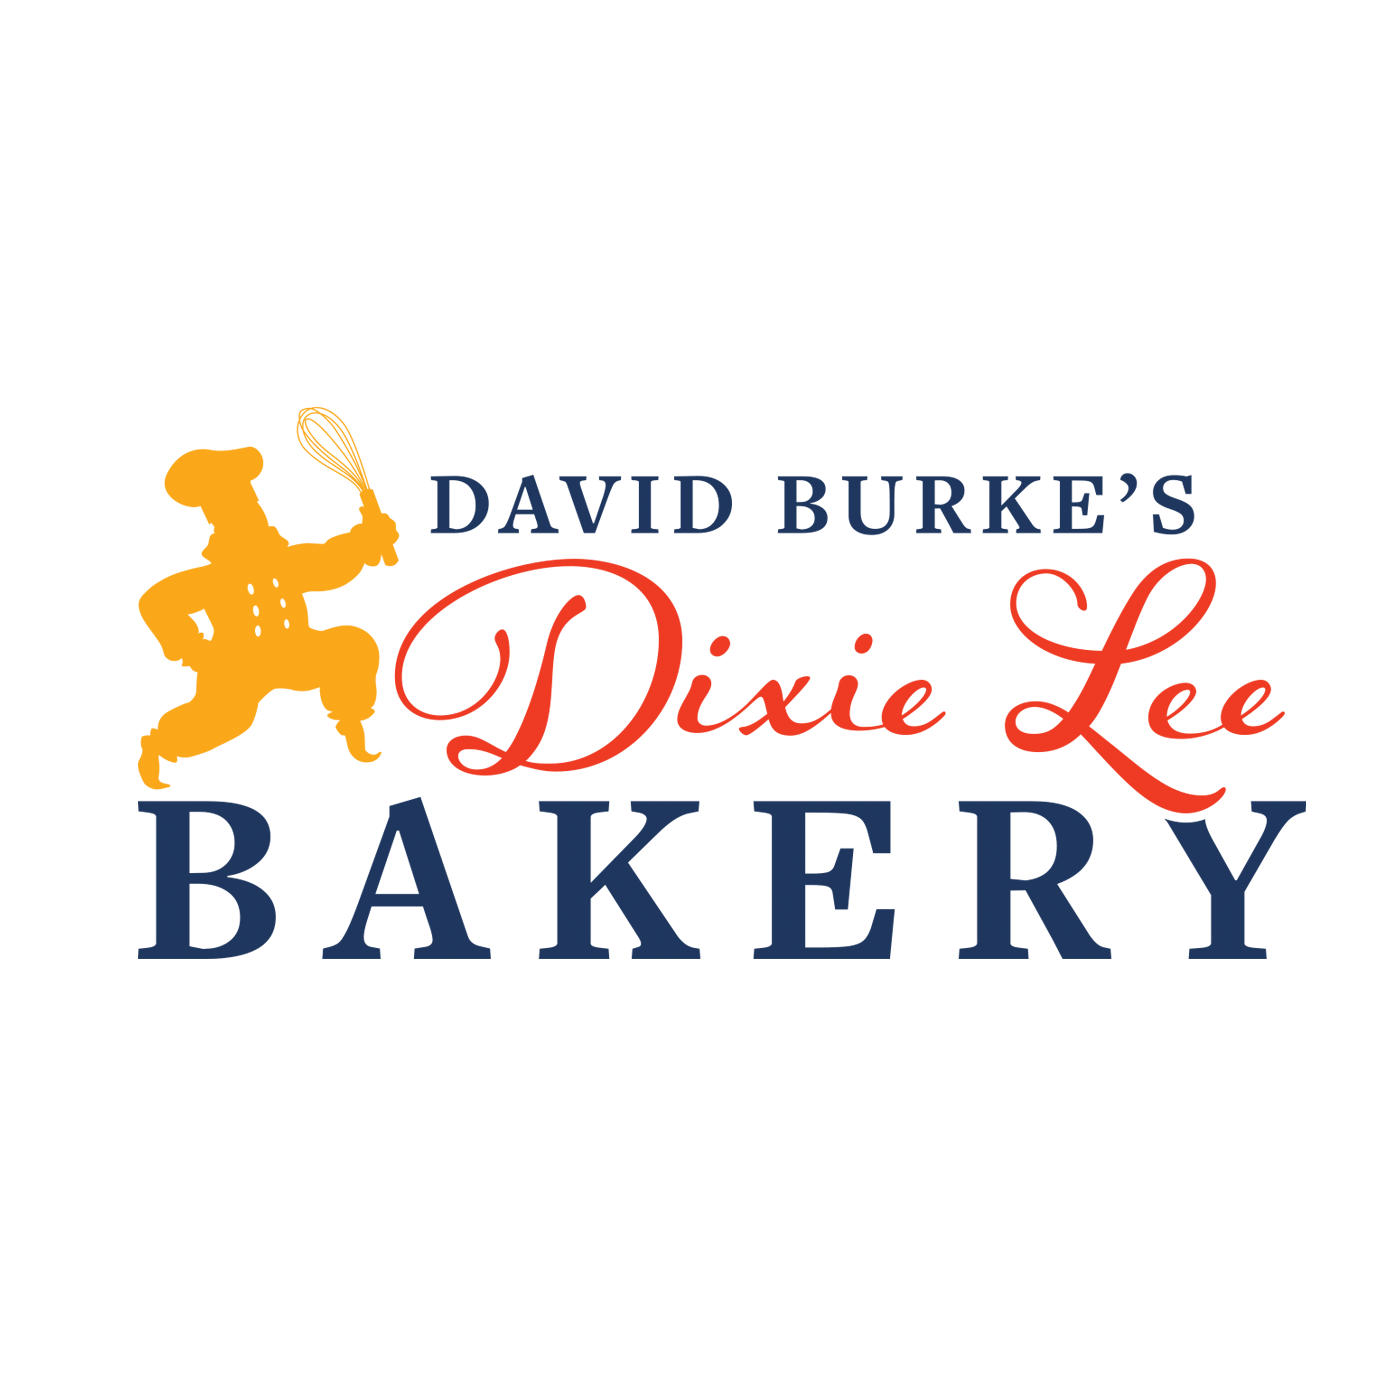 David Burke's Dixie Lee Bakery Logo in Circle